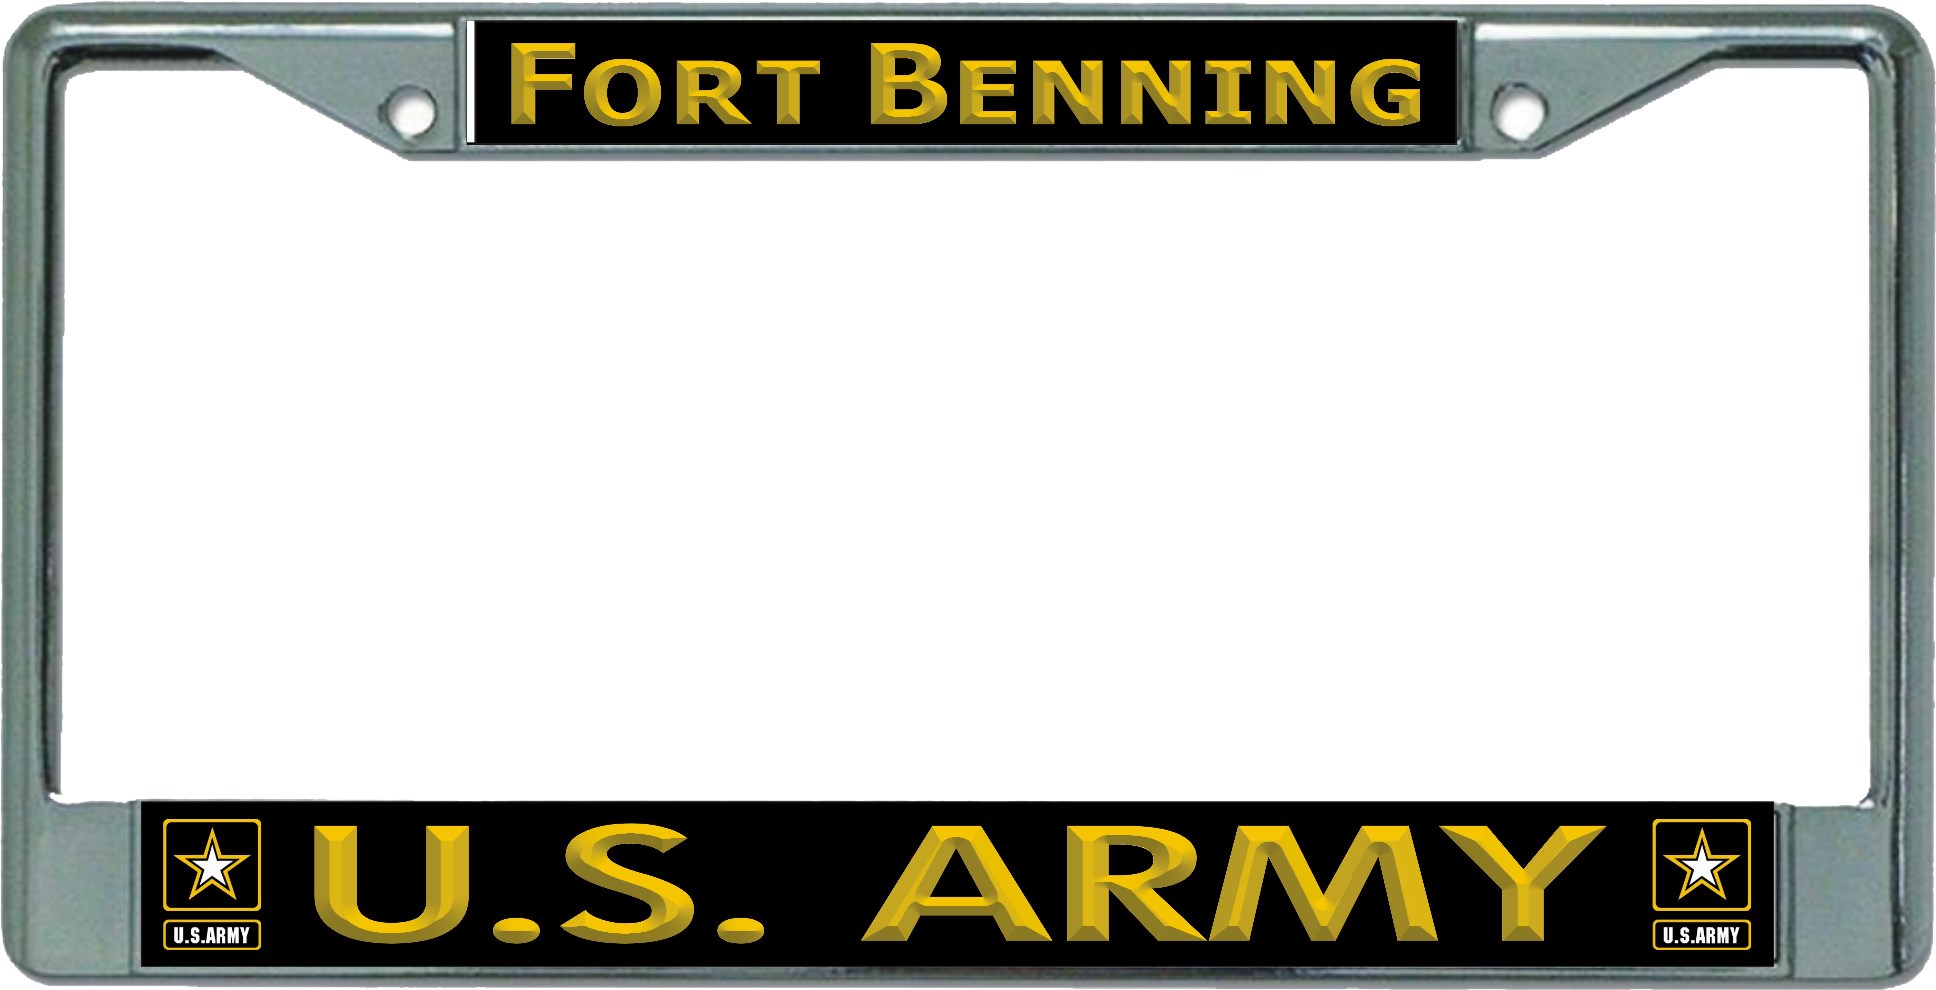 U.S. Army Fort Benning Chrome LICENSE PLATE Frame